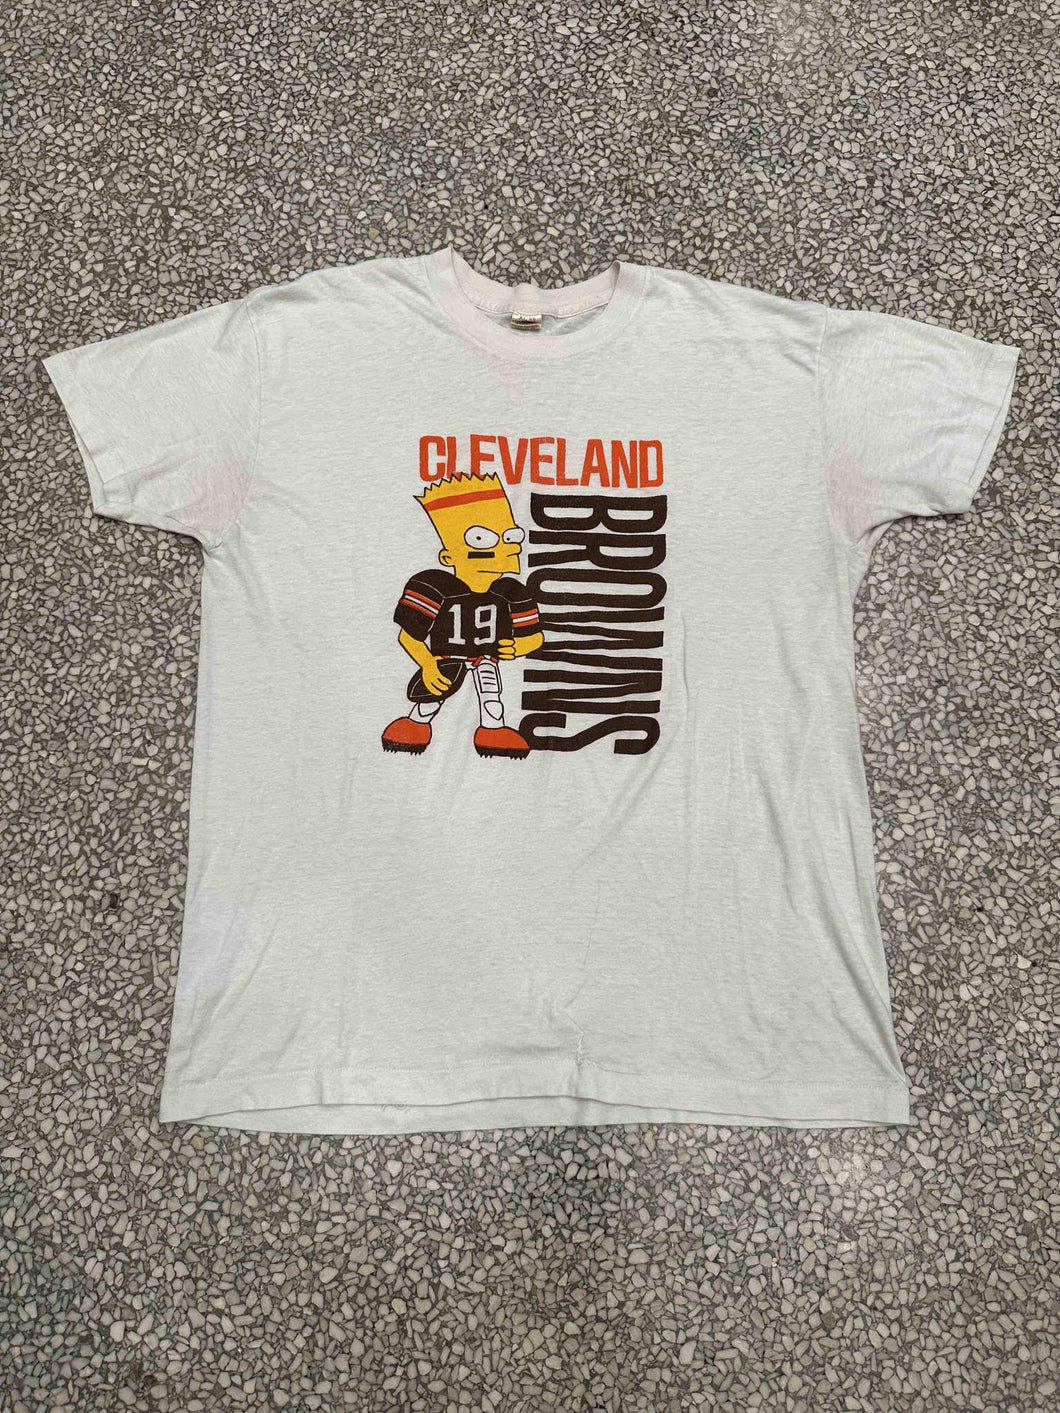 Cleveland Browns Vintage 80s Bart Simpson Paper Thin White ABC Vintage 